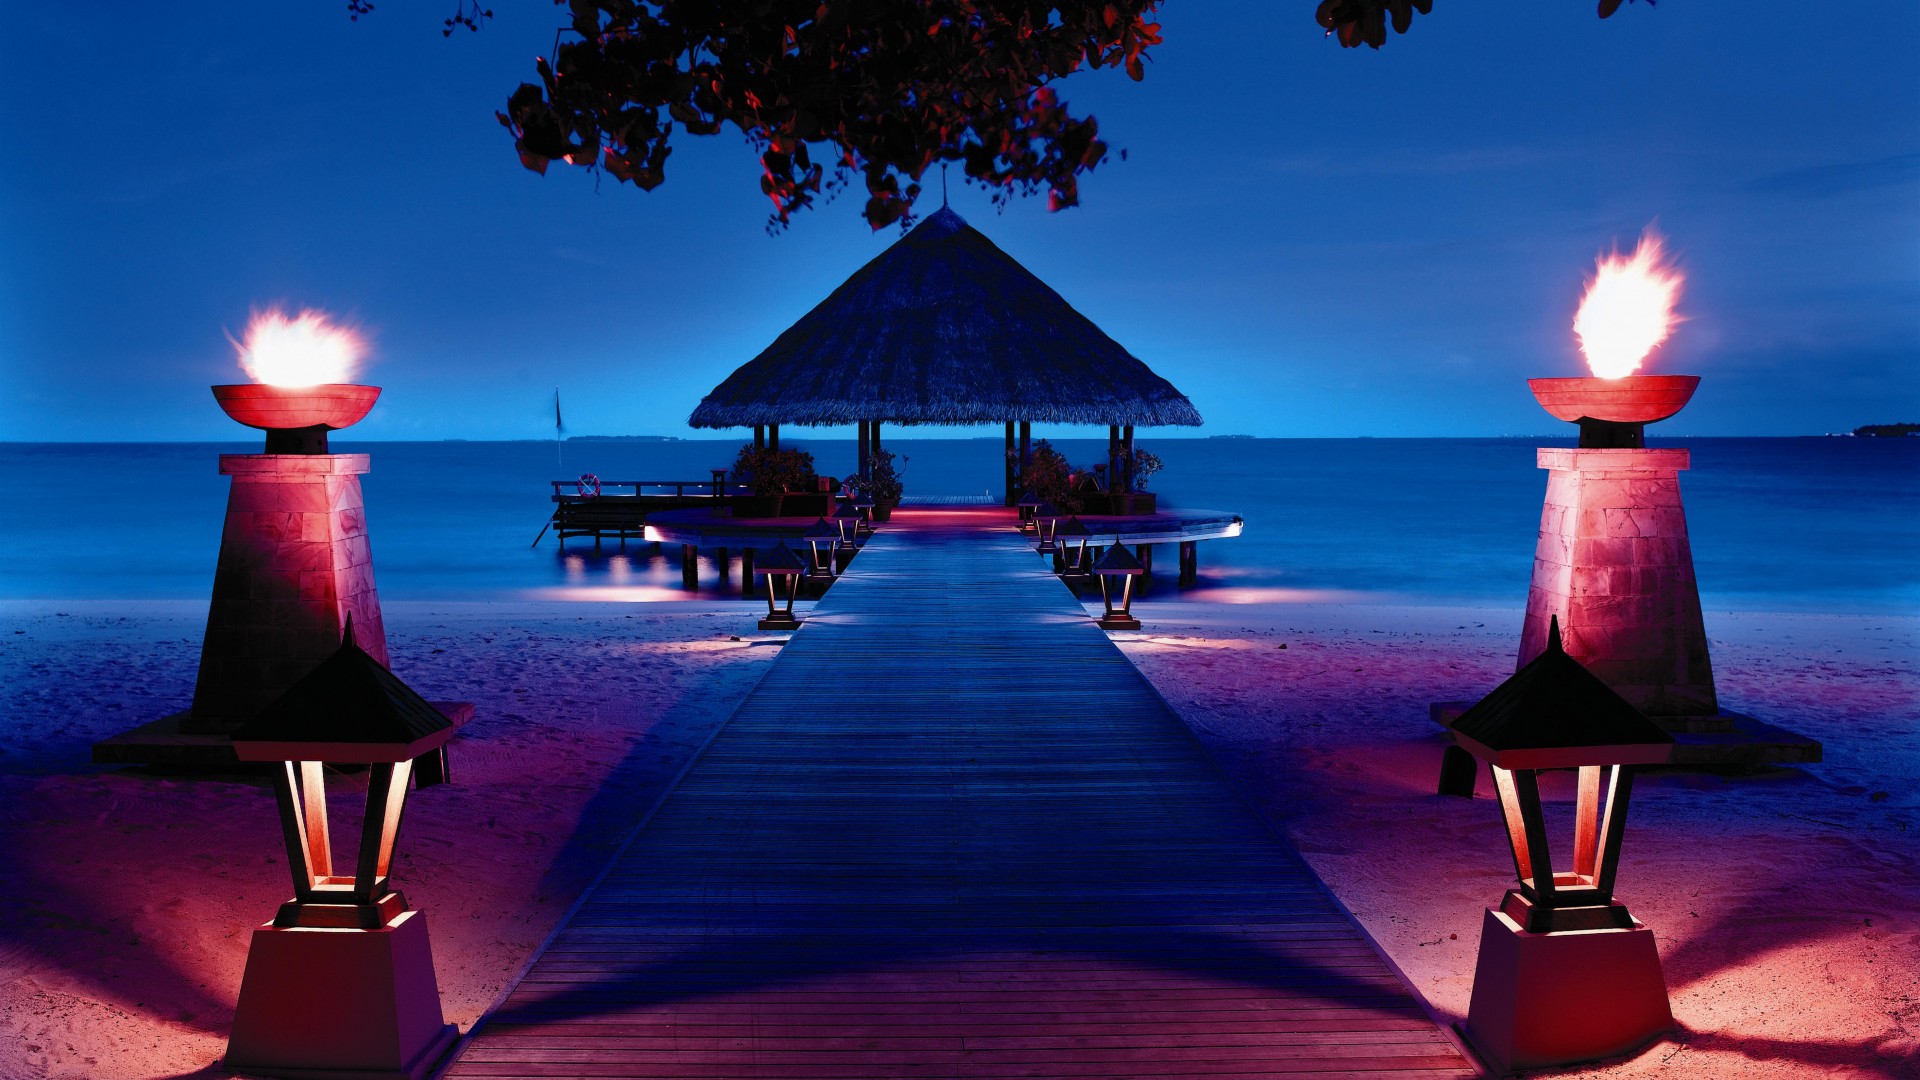 Ангсана Резорт, Спа, Мальдивы, Лучшие отели, Лучший пляж, туризм, путешествие, курорт, Angsana Resort & Spa, Ihuru, Maldives, Best Hotels of 2017, Best beaches of 2017, tourism, travel, resort, vacation (horizontal)